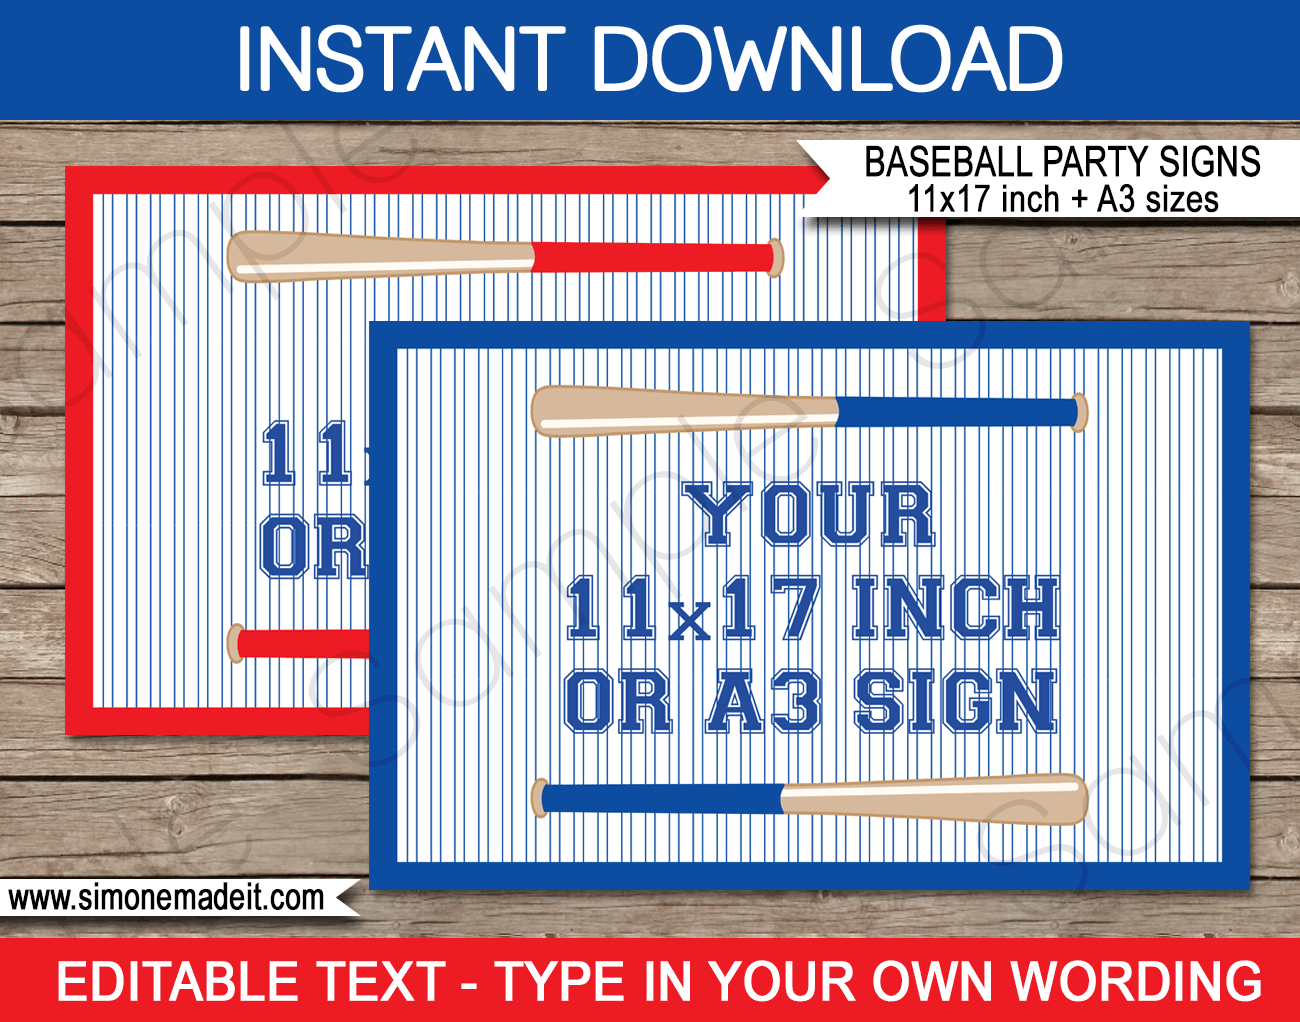 Baseball Party Signs | Party Decorations | Editable & Printable DIY Template | Ledger 11x17 inches | A3 | $4.00 via SIMONEmadeit.com